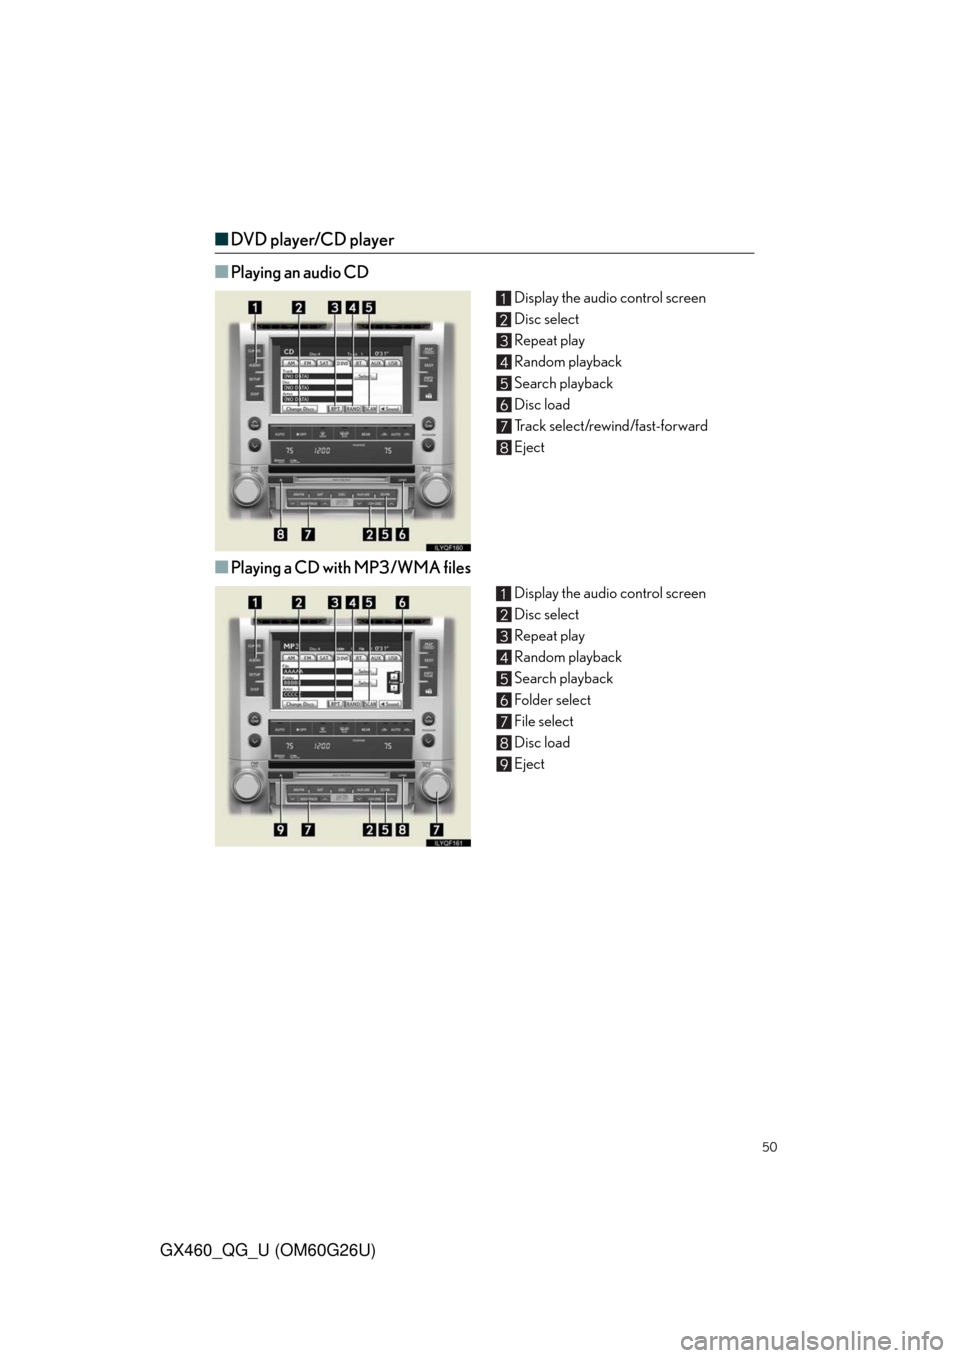 Lexus GX460 2011  Specifications / LEXUS 2011 GX460  QUICK GUIDE (OM60G26U) Service Manual 50
GX460_QG_U (OM60G26U)
■DVD player/CD player
■
Playing an audio CD
Display the audio control screen
Disc select
Repeat play
Random playback
Search playback
Disc load
Track select/rewind/fast-for